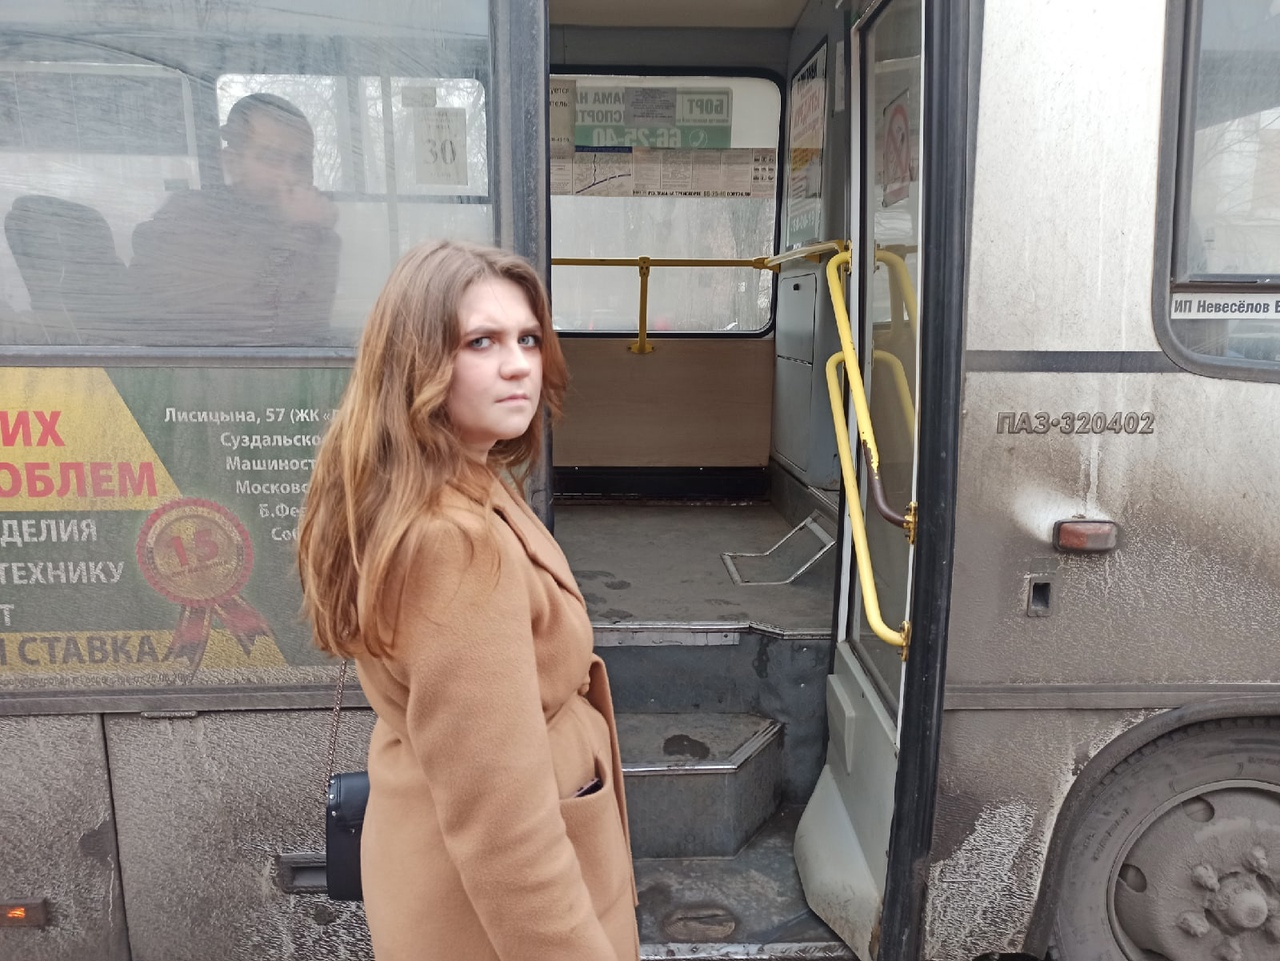 Уберут 200 маршруток: власти рассказали о ликвидации транспорта в Ярославле